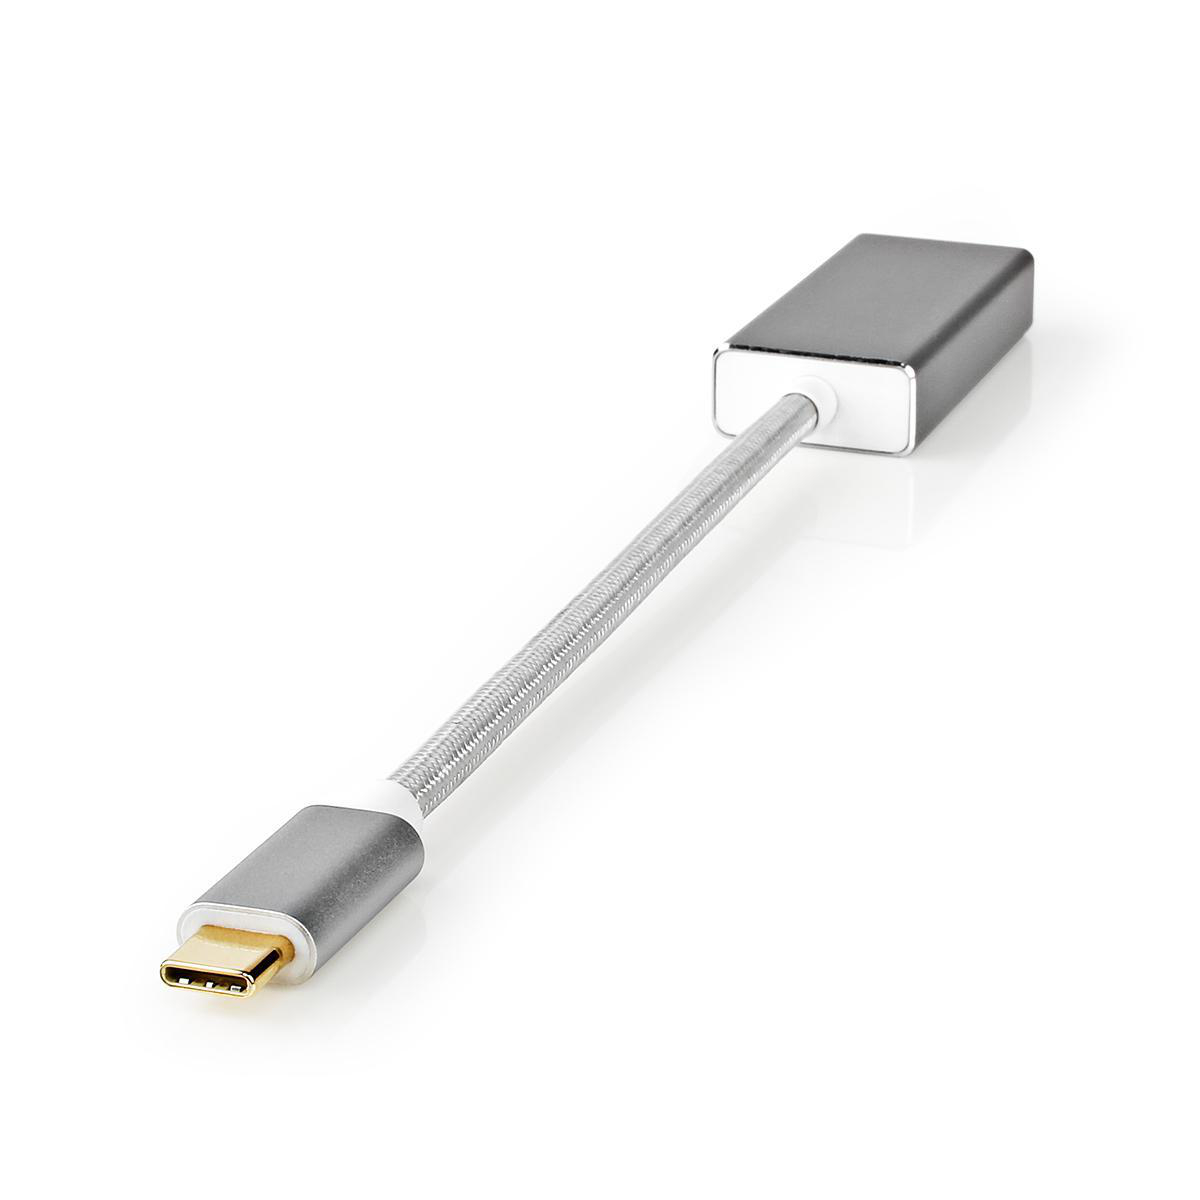 CCTB64550AL02, NEDIS USB-C Adapter